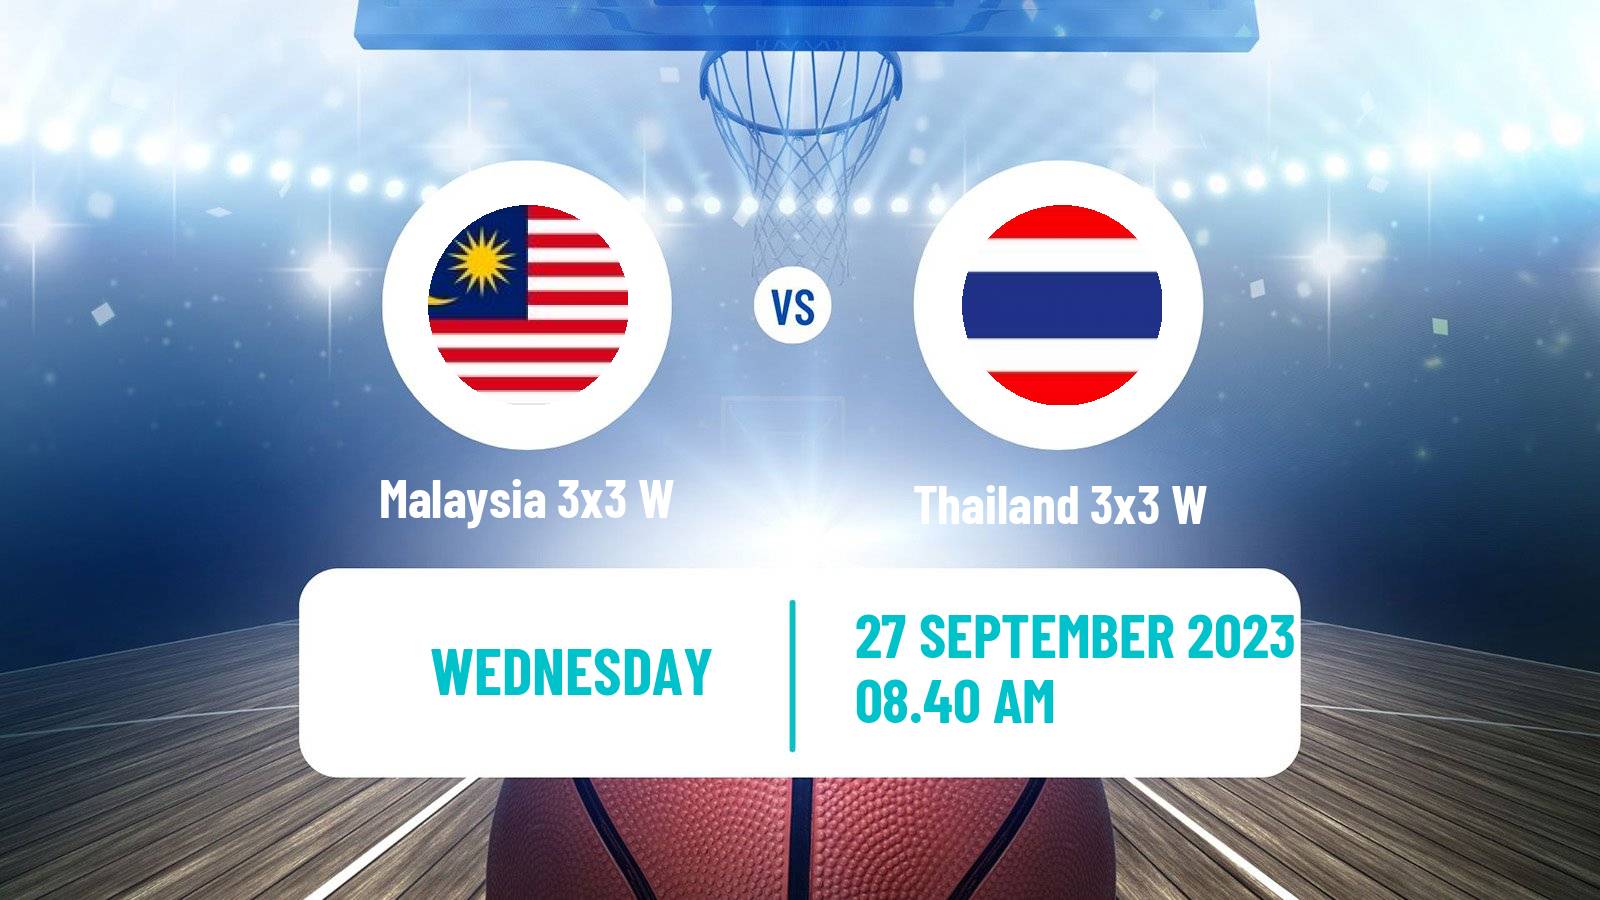 Basketball Asian Games Basketball 3x3 Women Malaysia 3x3 W - Thailand 3x3 W